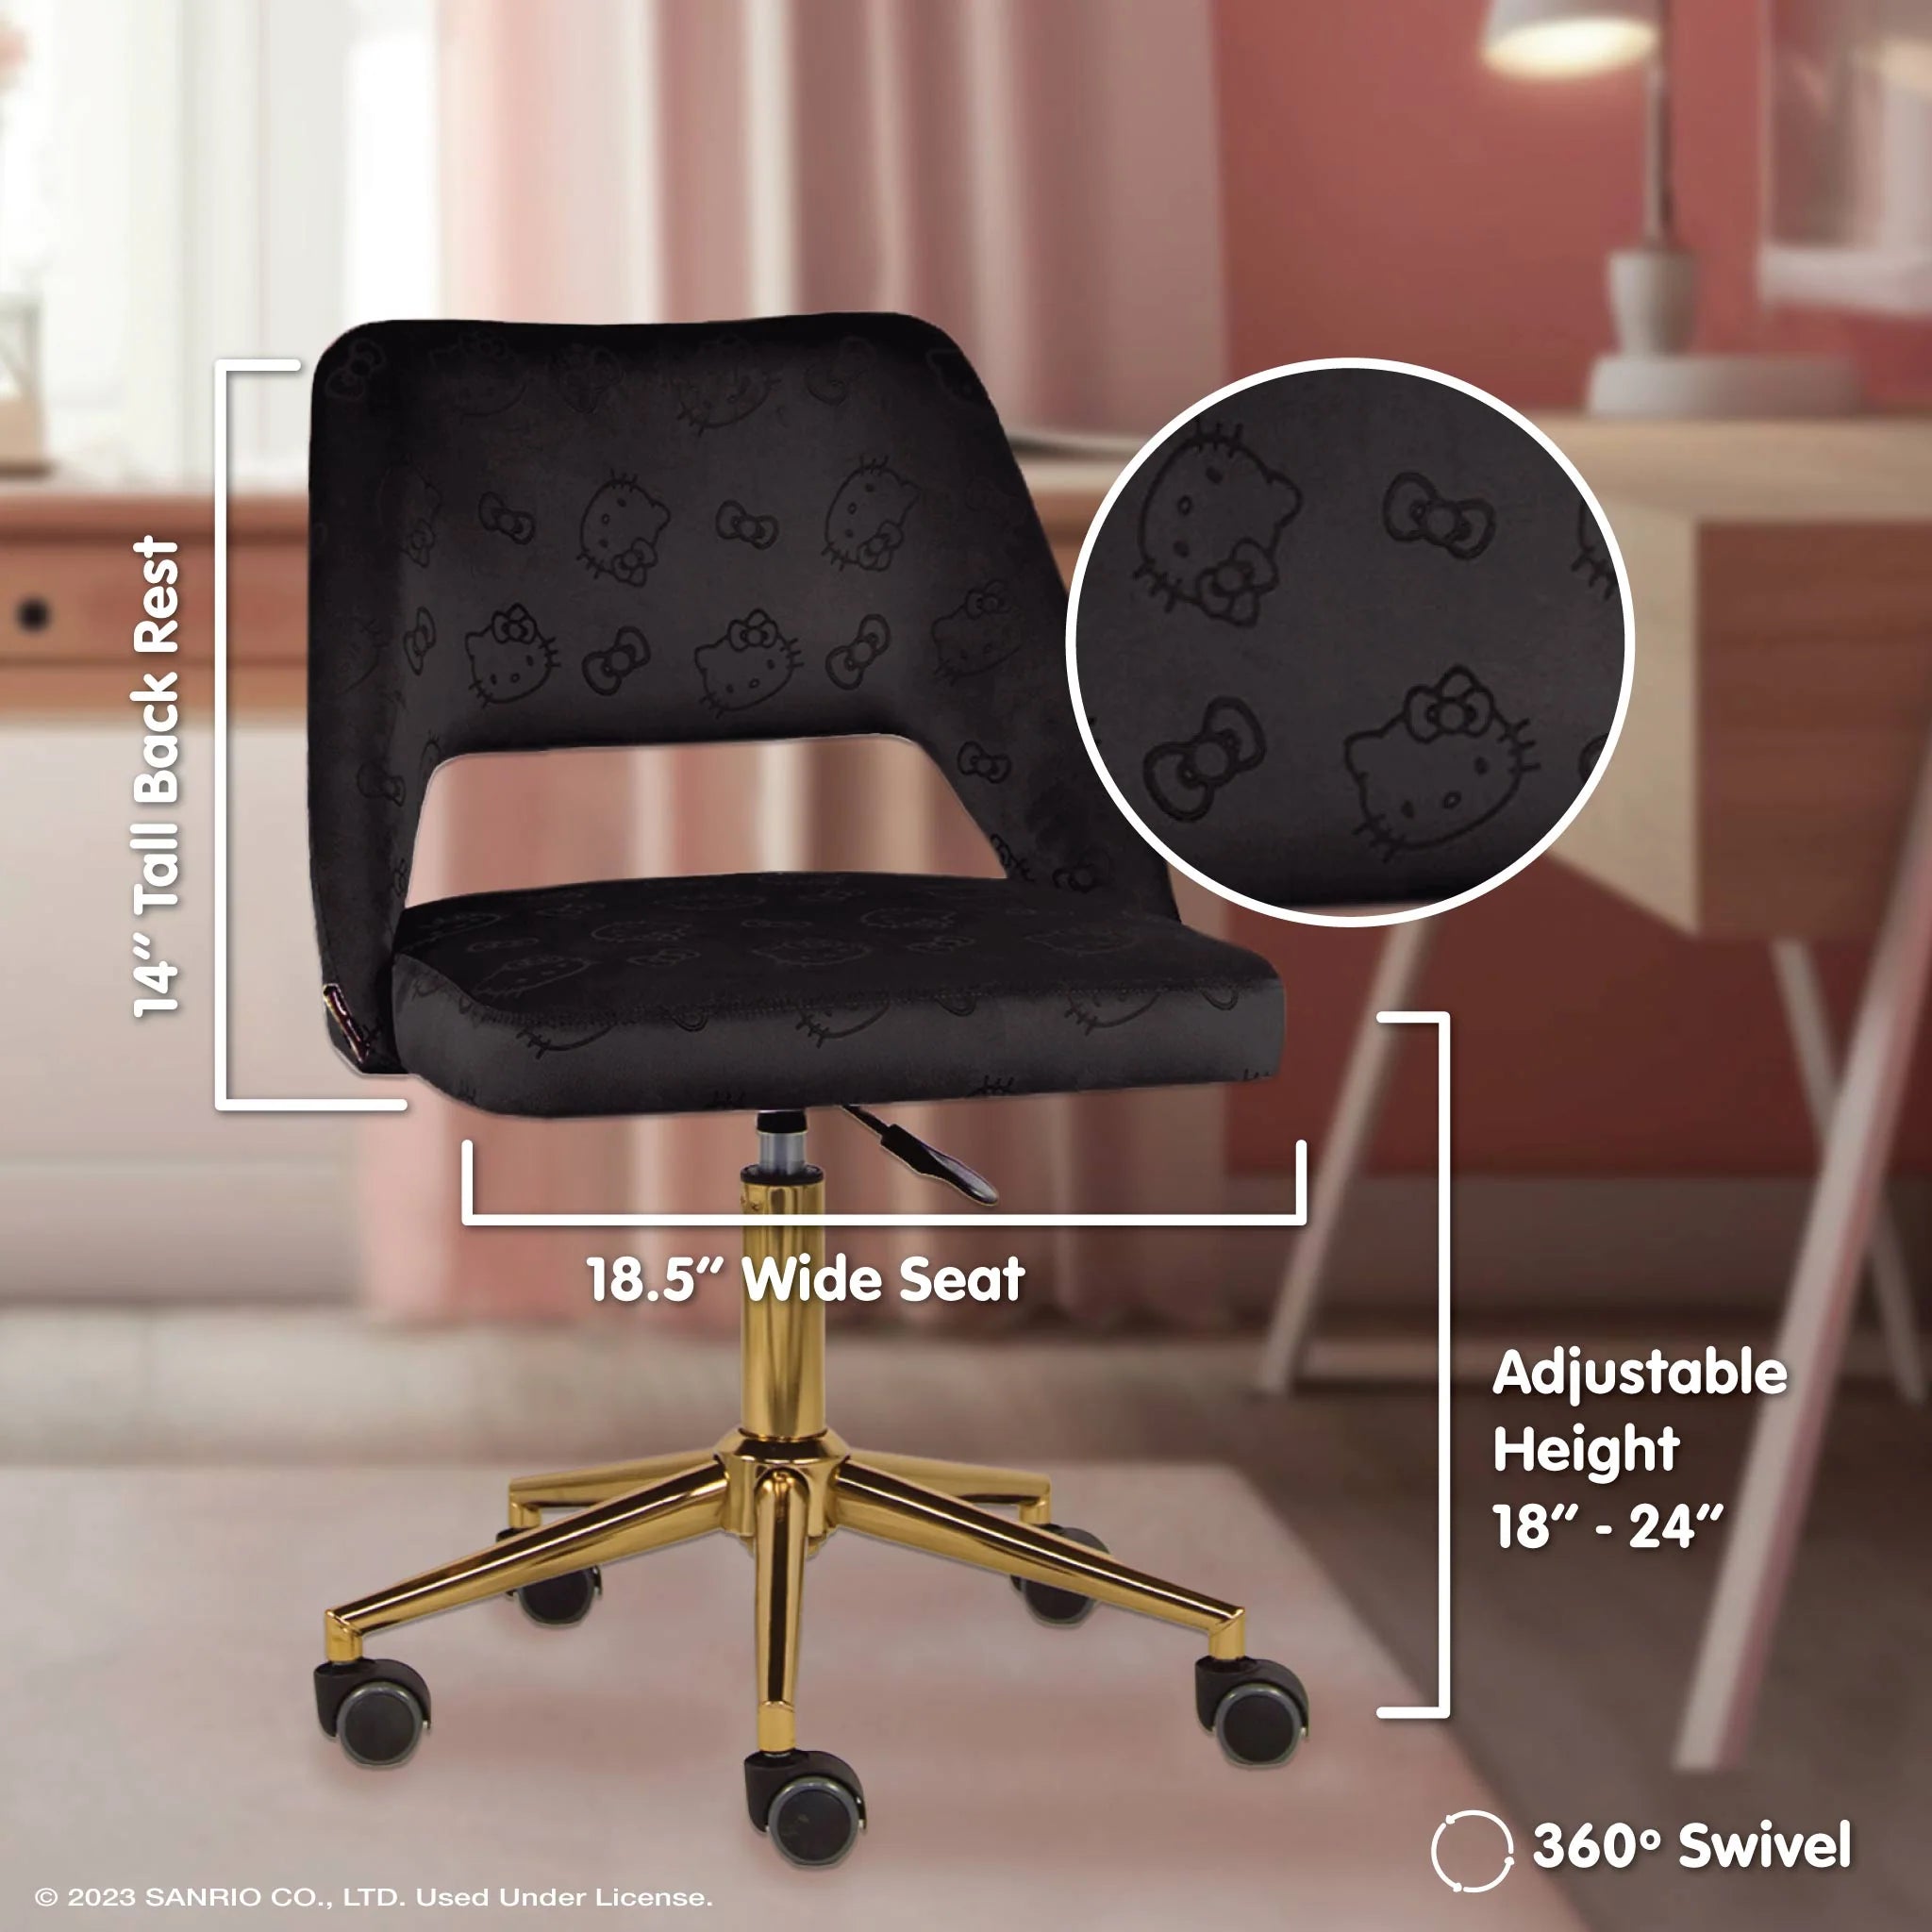 Impressions Vanity - Hello Kitty Vanity Swivel Chair Black